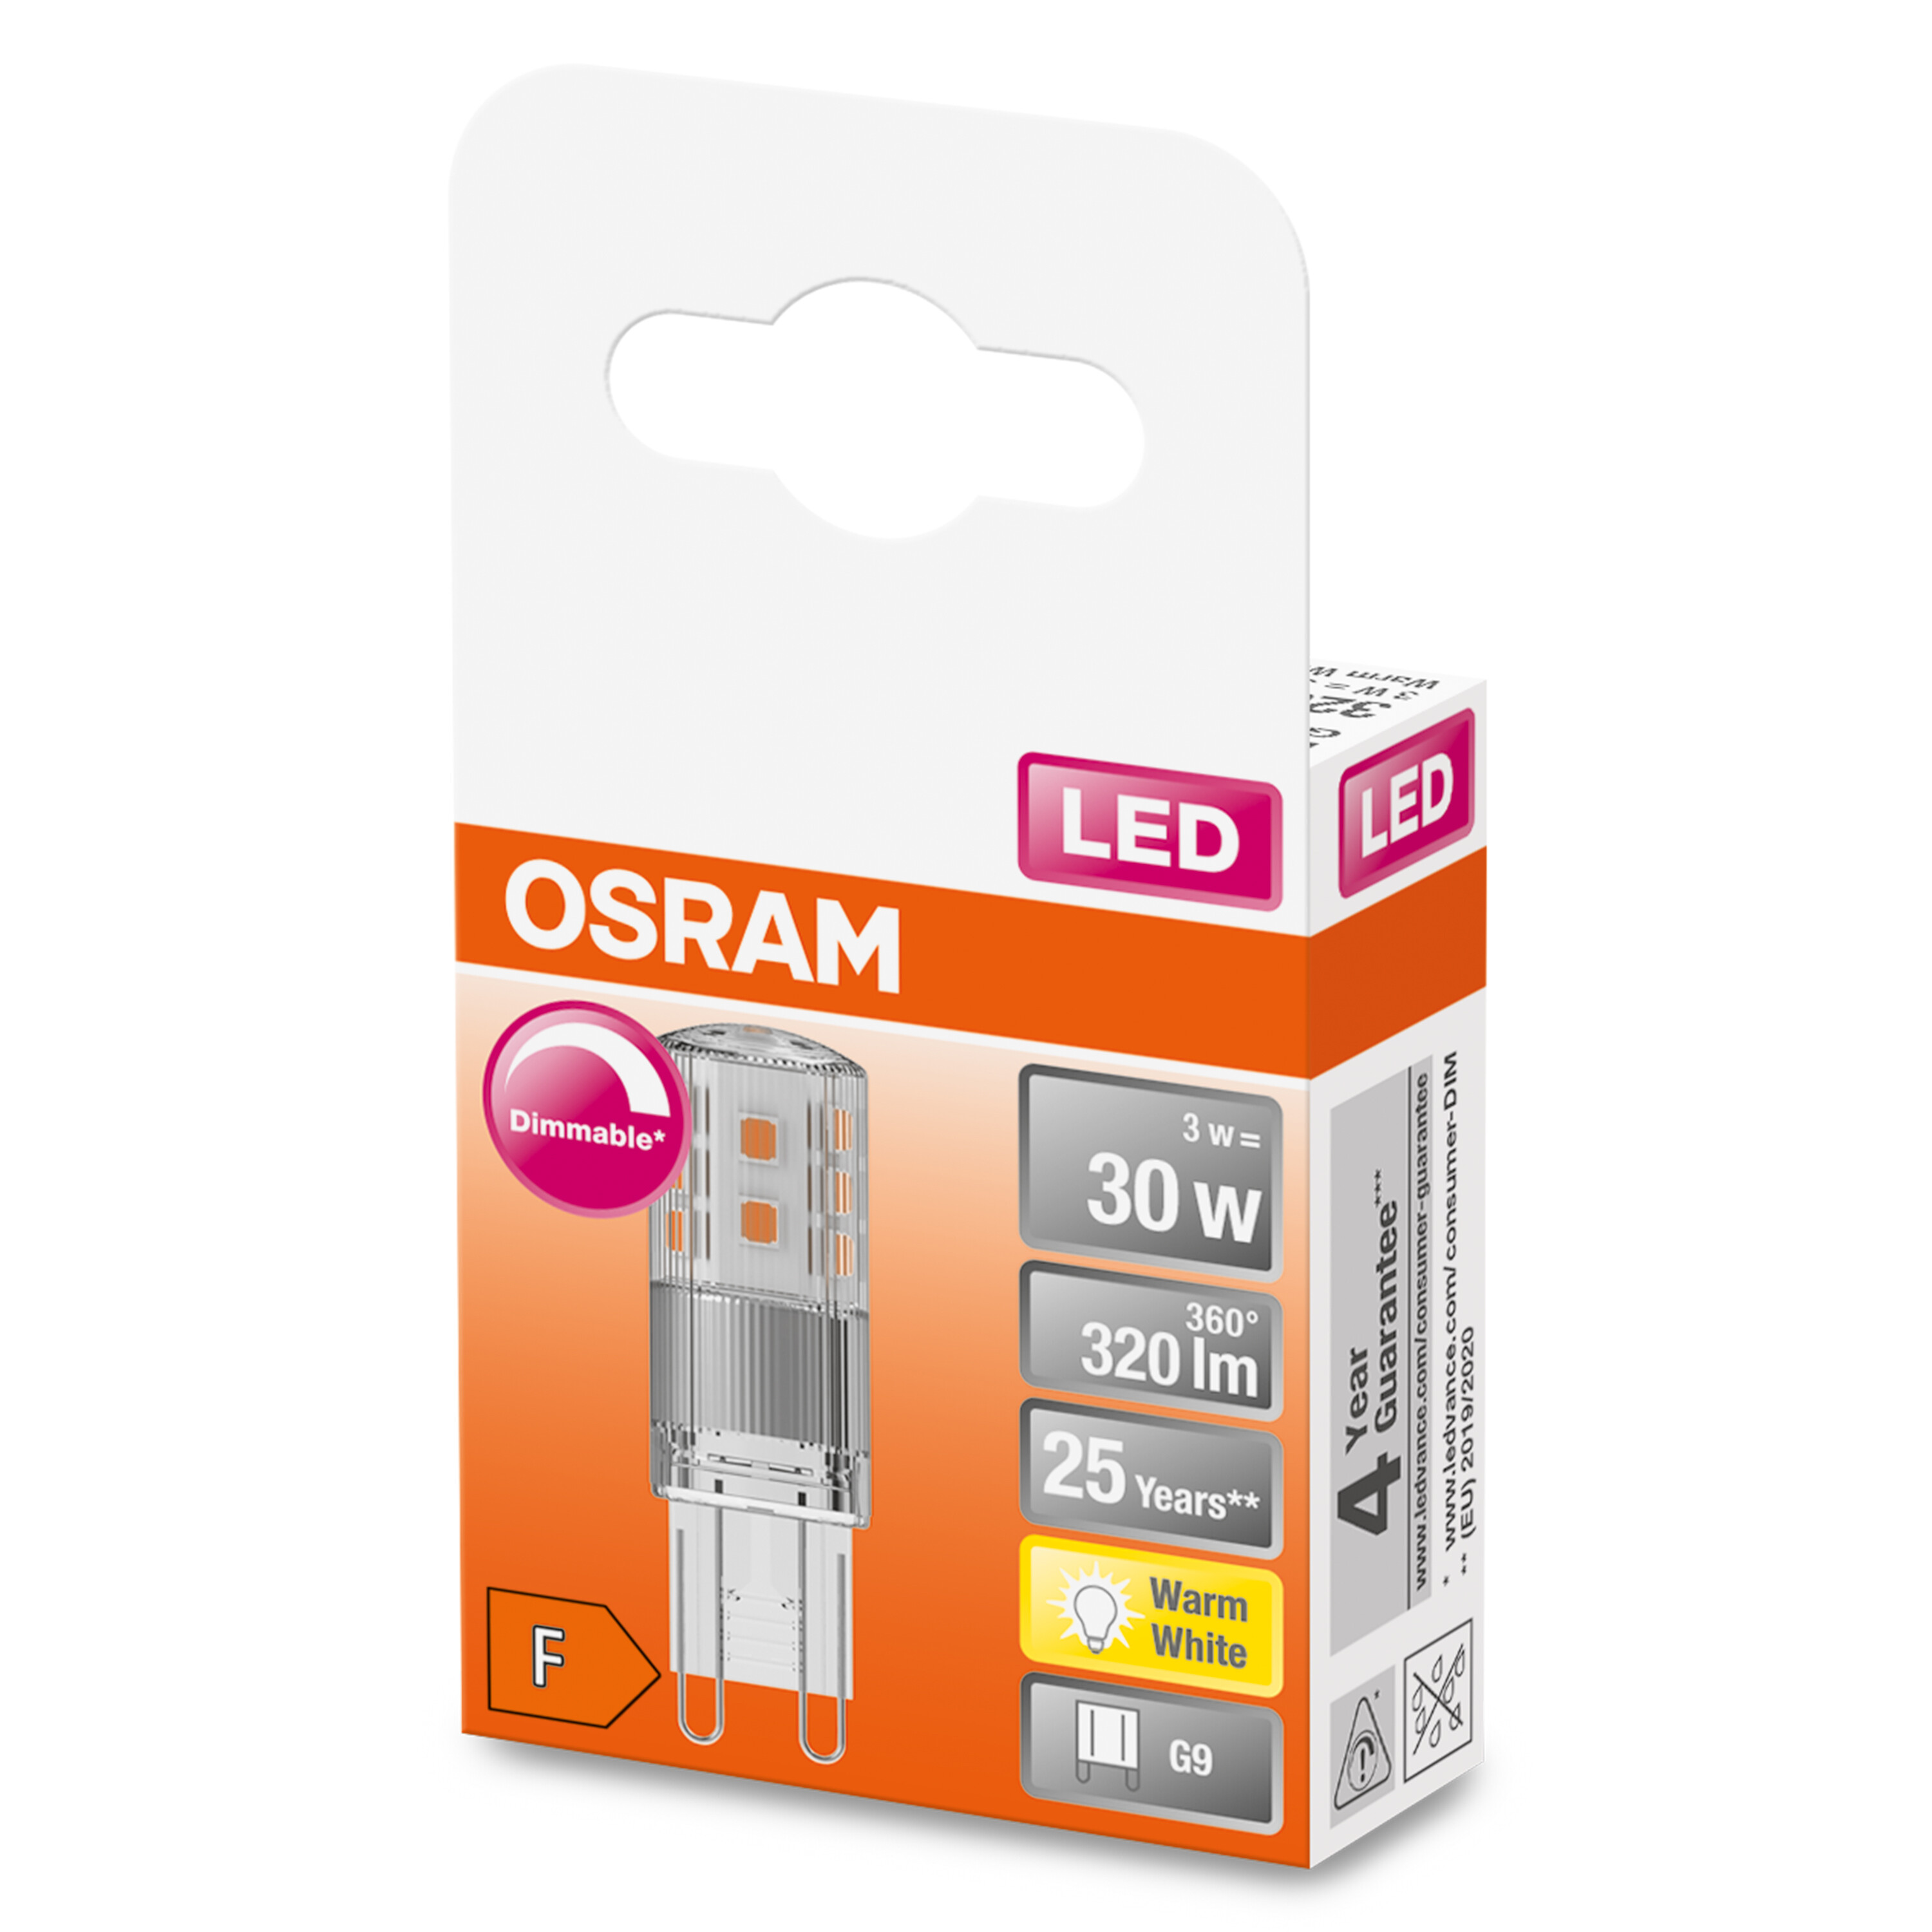 OSRAM  LED LED Warmweiß PIN Lampe G9 DIM lumen 320